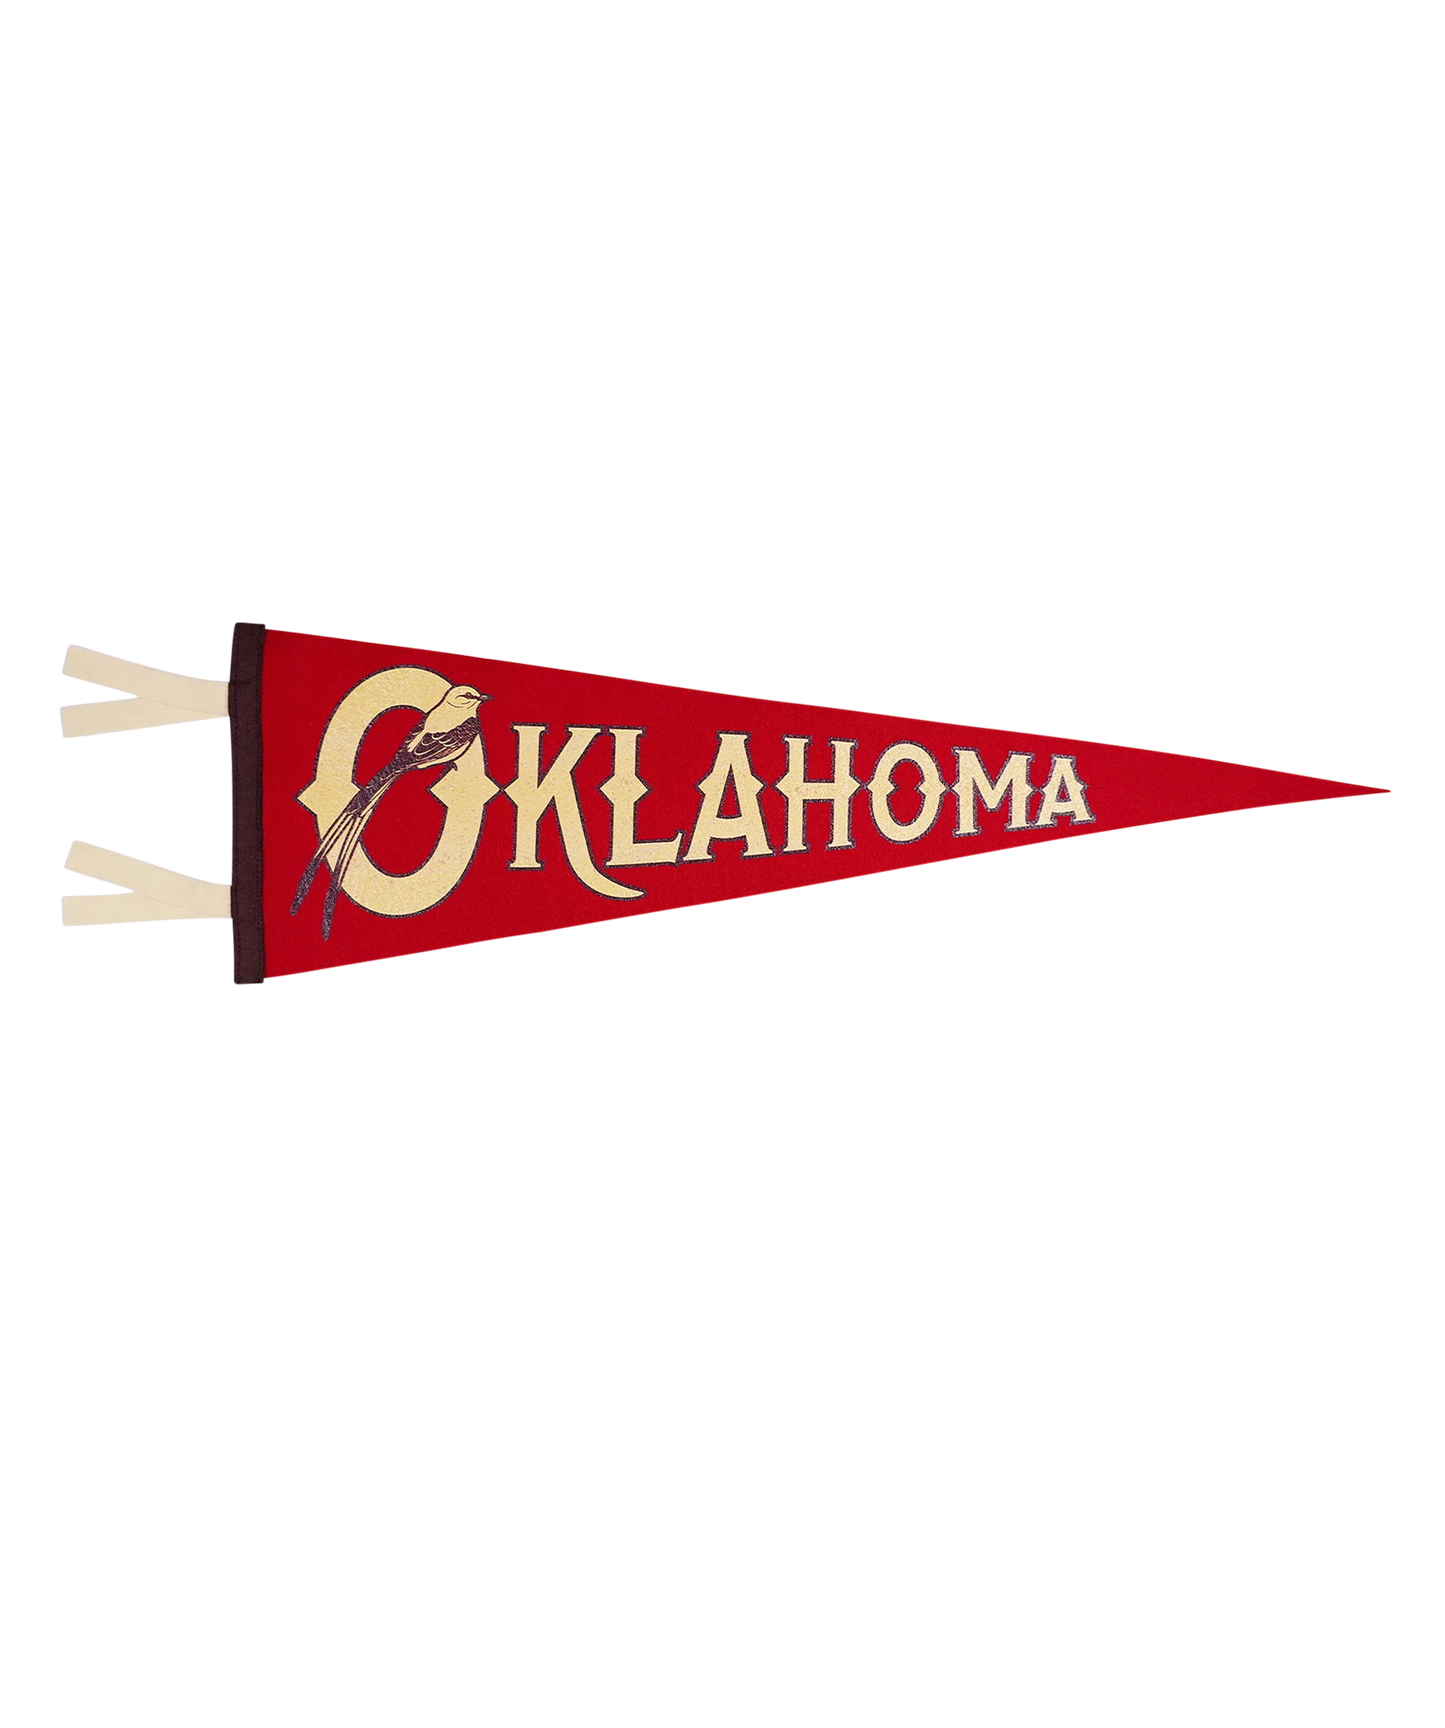 Oklahoma Pennant